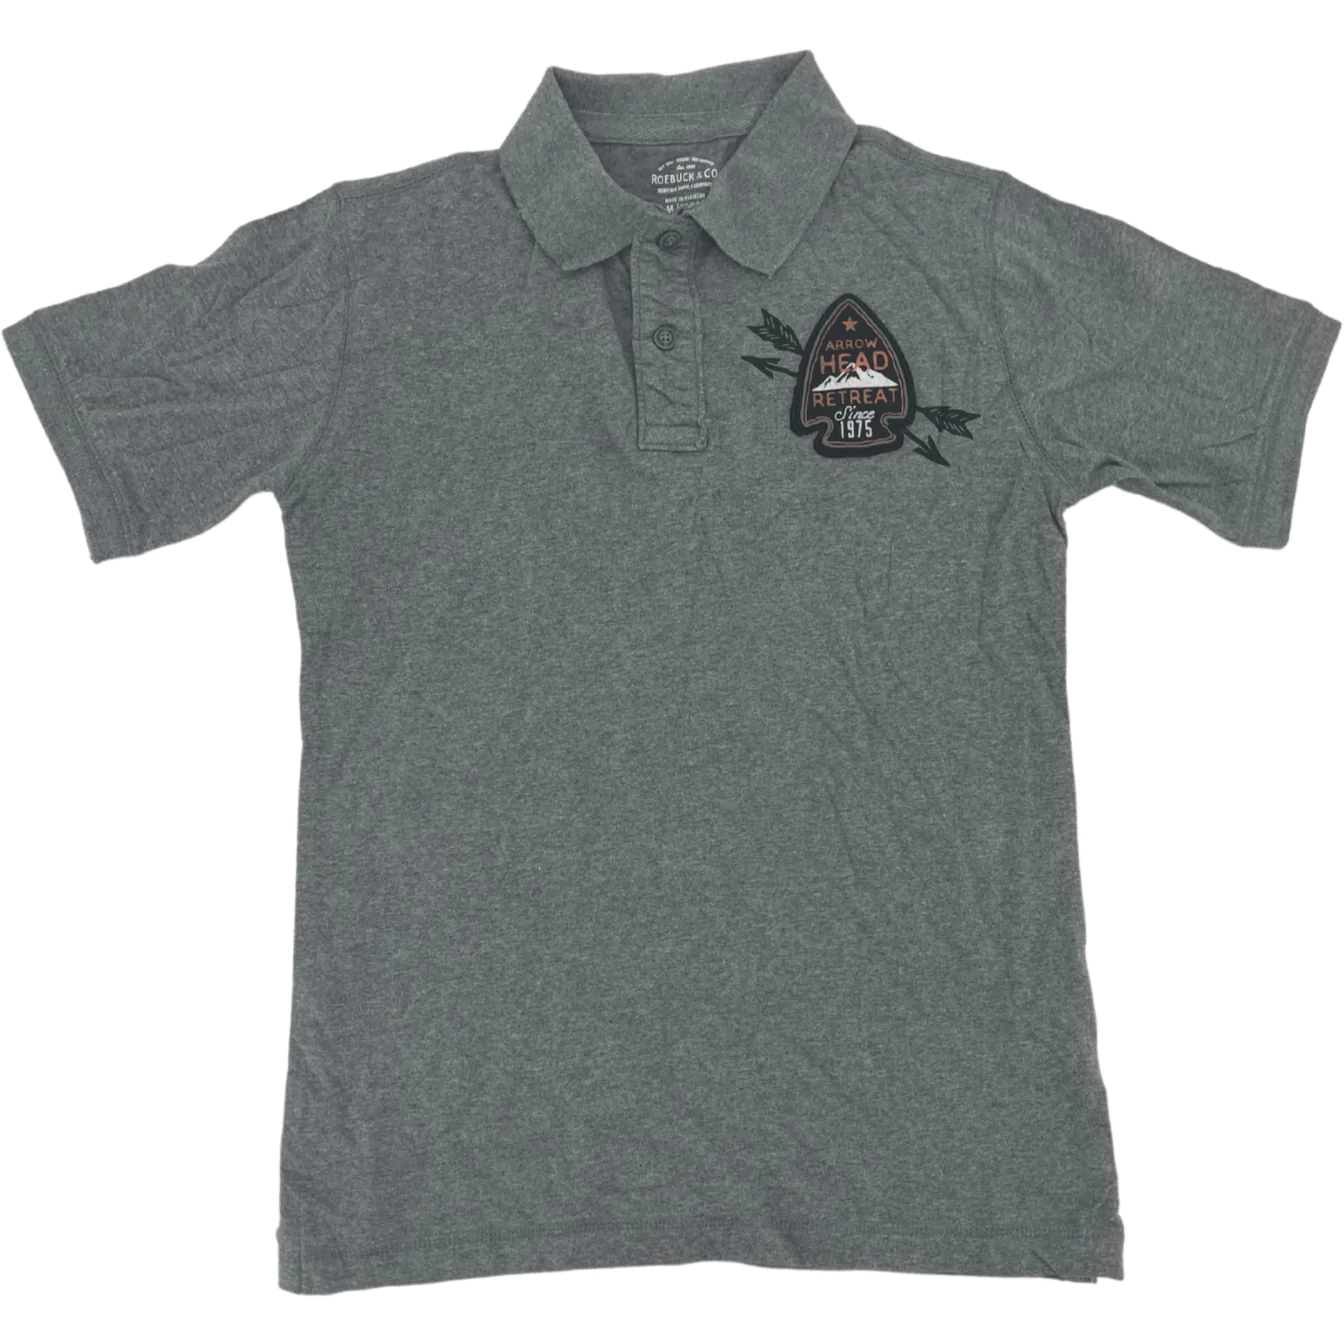 Roebuck & Co Boy's T-Shirt / Grey / Size Medium